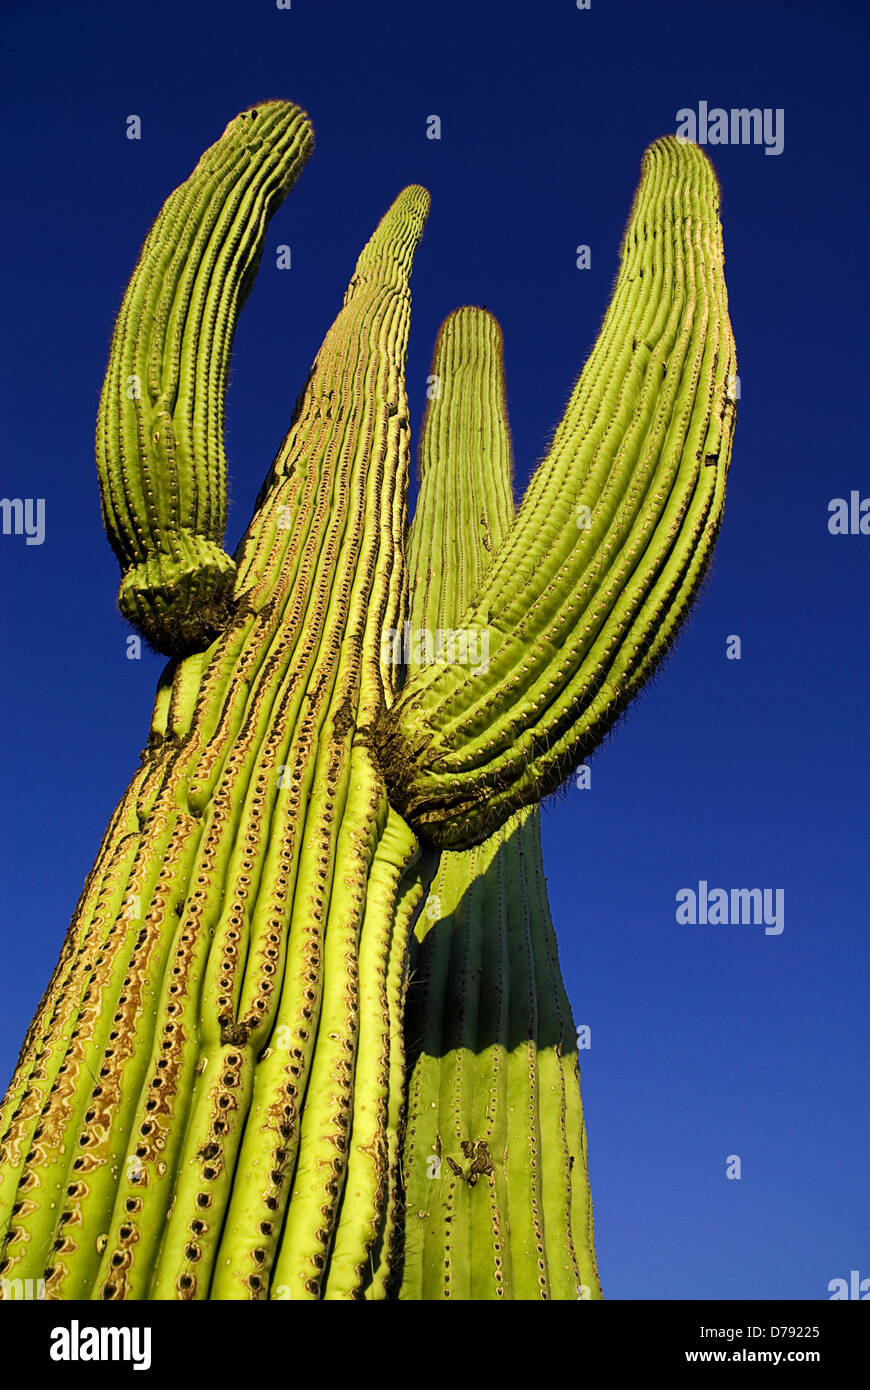 USA, Arizona, Saguaro National Park, Carnegiea gigantea, Giant Saguaro cactus with raised ridged branches against blue sky. Stock Photo